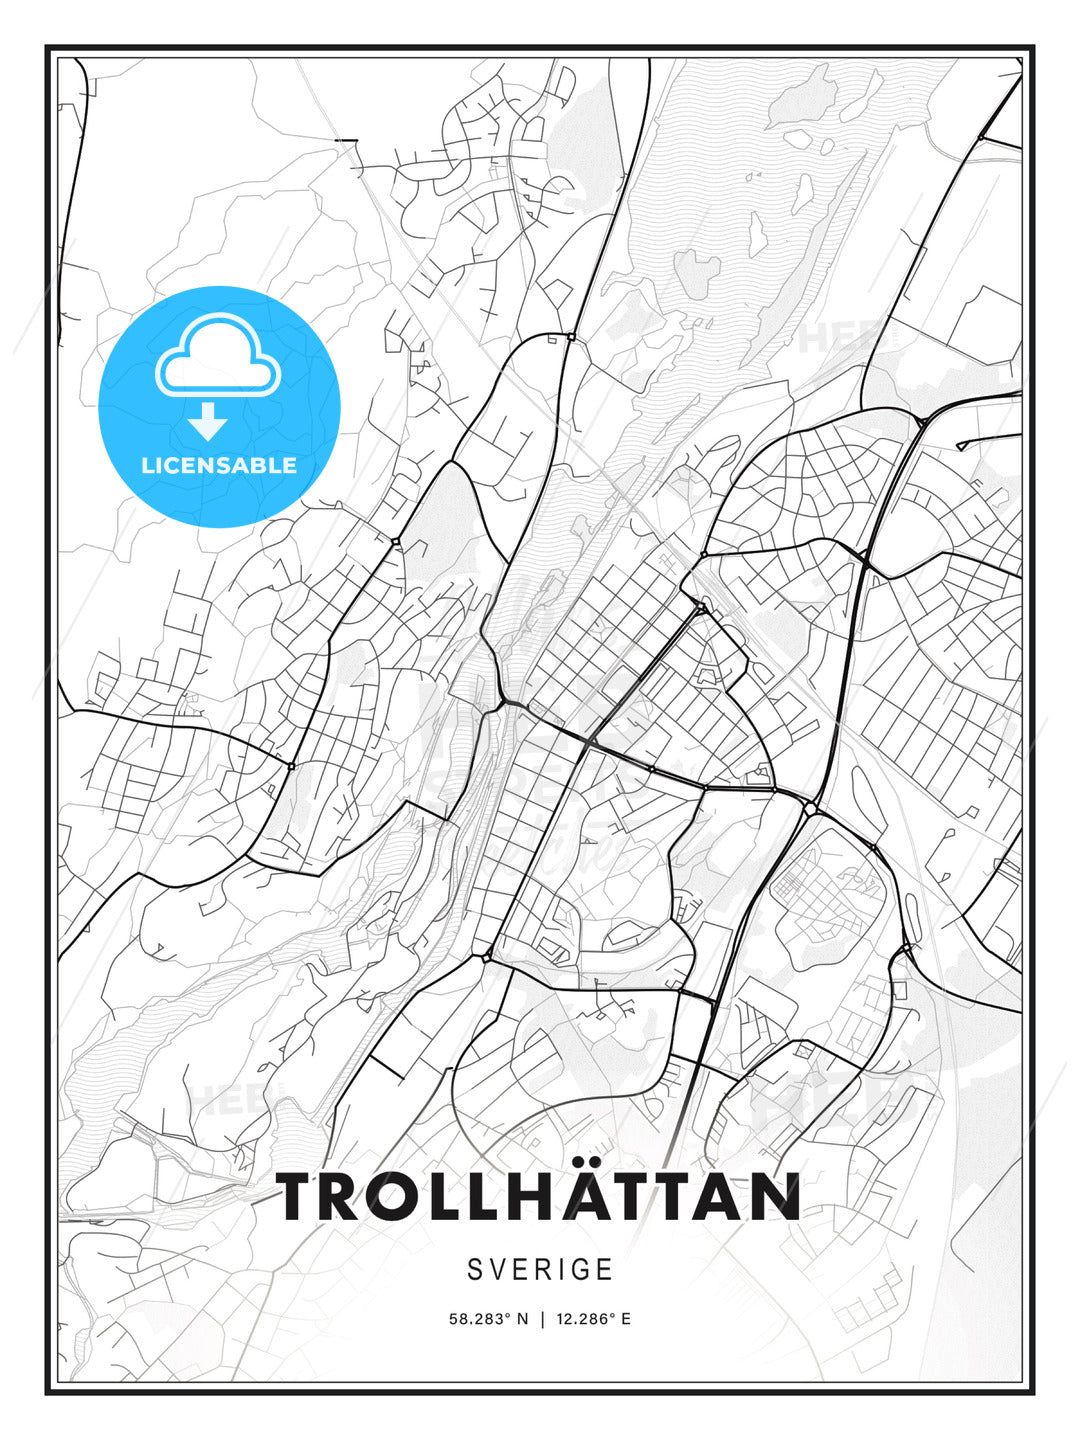 Trollhättan, Sweden, Modern Print Template in Various Formats - HEBSTREITS Sketches